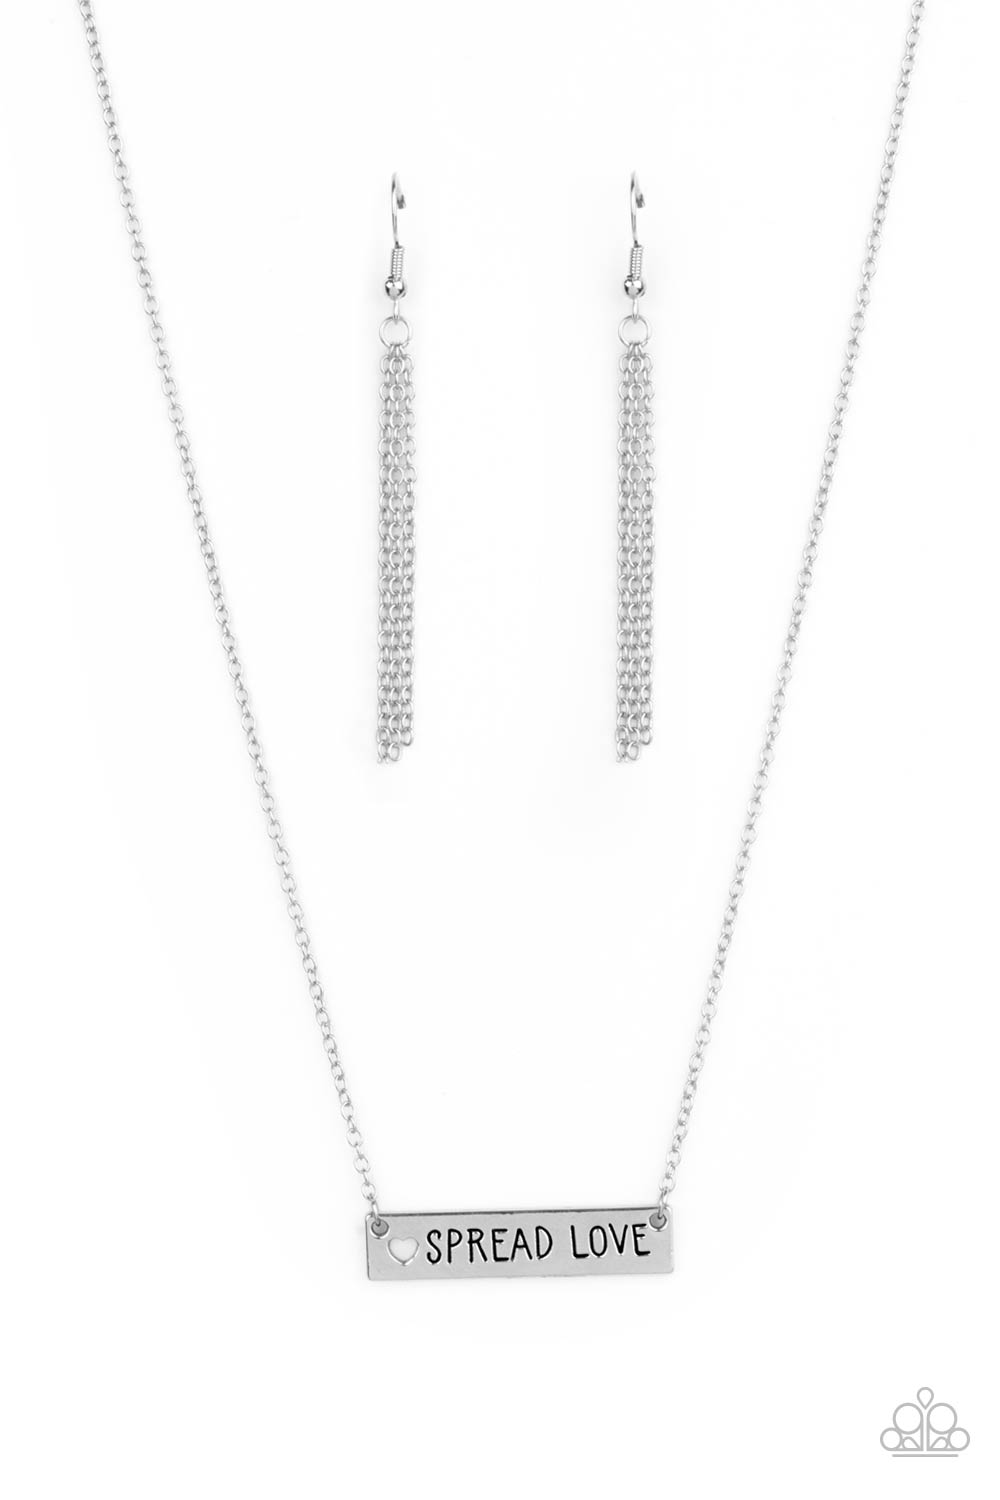 Paparazzi Accessories - Spread Love - Silver Inspirational Necklaces